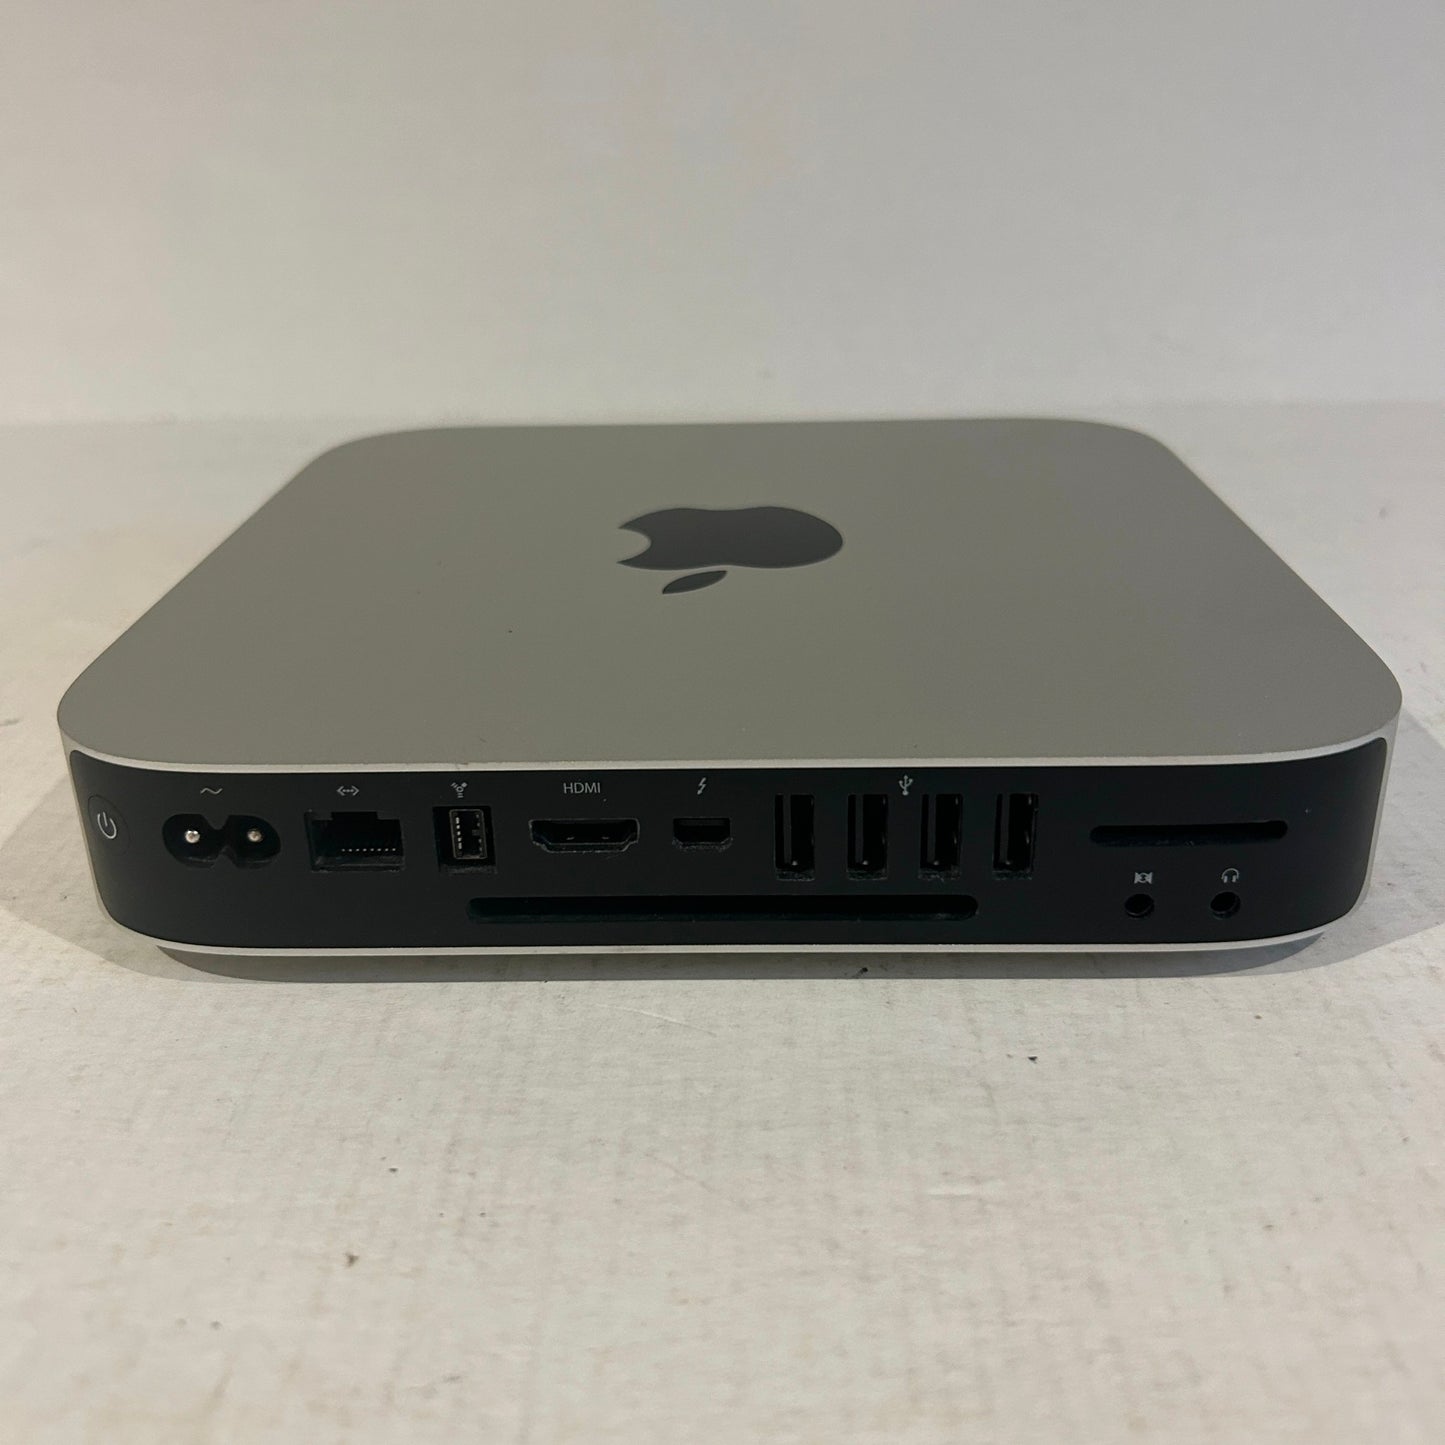 Apple Mac Mini "Core i5" 2.5 Ghz - Late 2012 - A1347